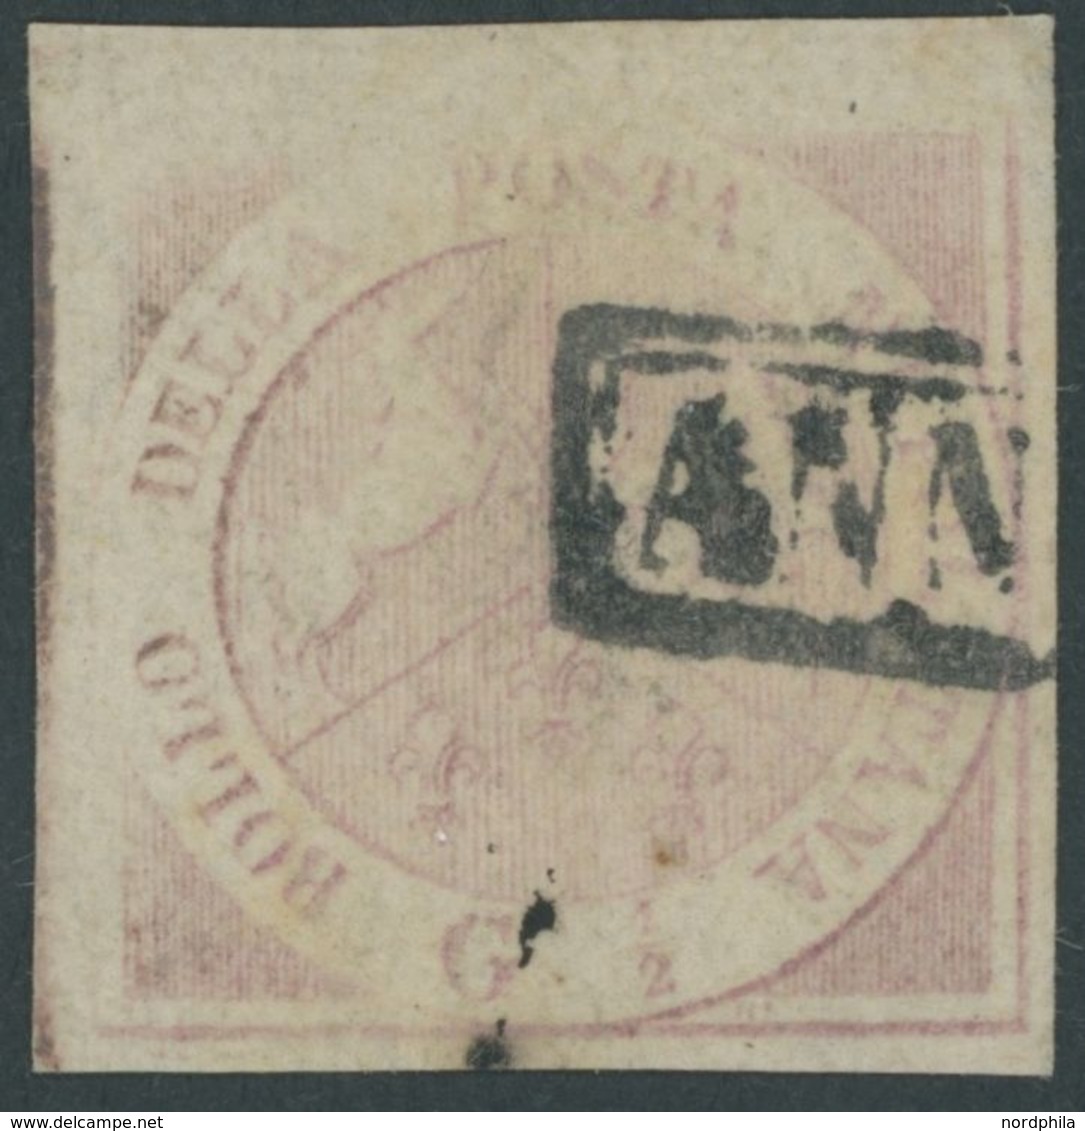 NEAPEL 1 O, 1858, 1/2 Gr. Mattlilarosa, Feinst, Gepr. E. Diena Und Starauschek, Mi. 250.- - Neapel